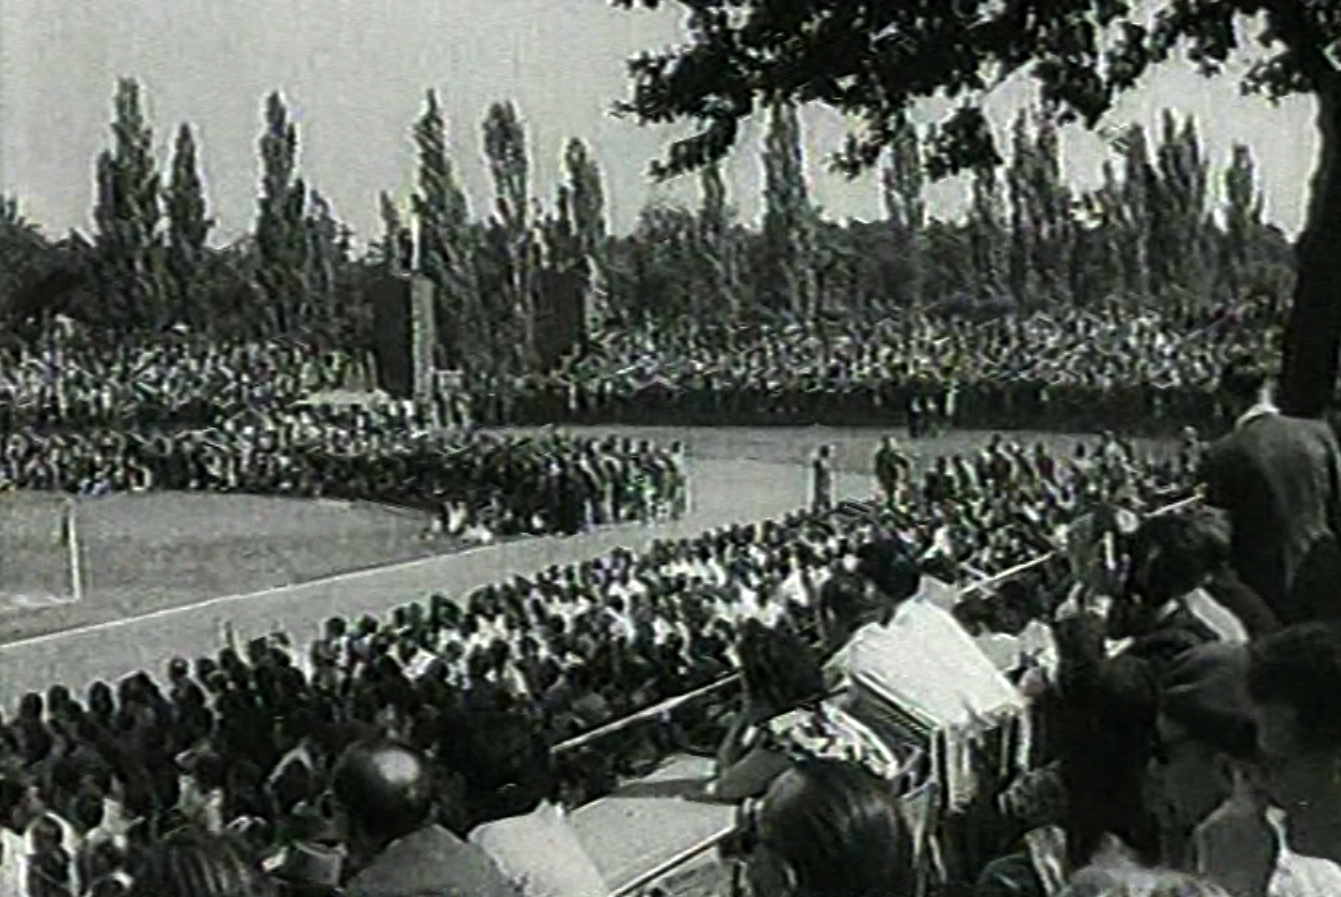 Węgry - Polska 8:2 (10.07.1949)